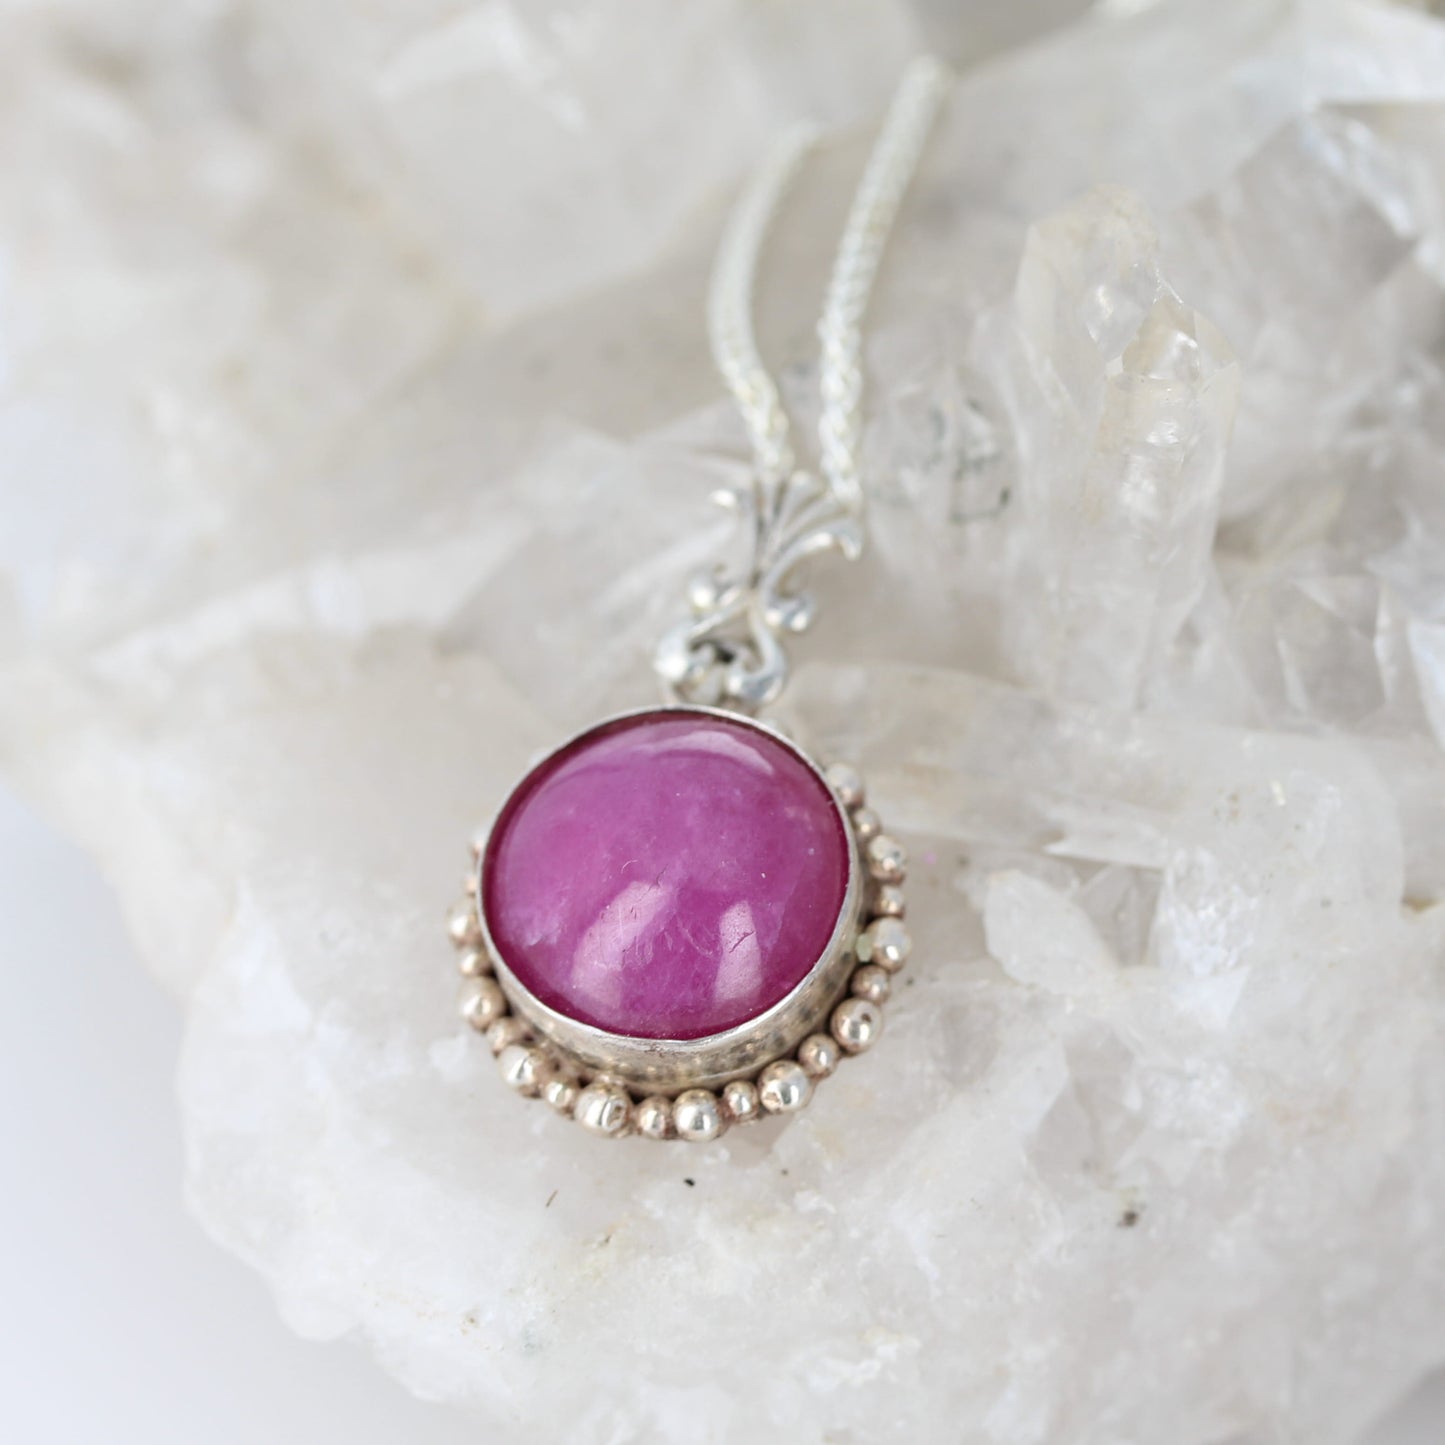 Elegant Pink Genuine Ruby Pendant Necklace Sterling Round